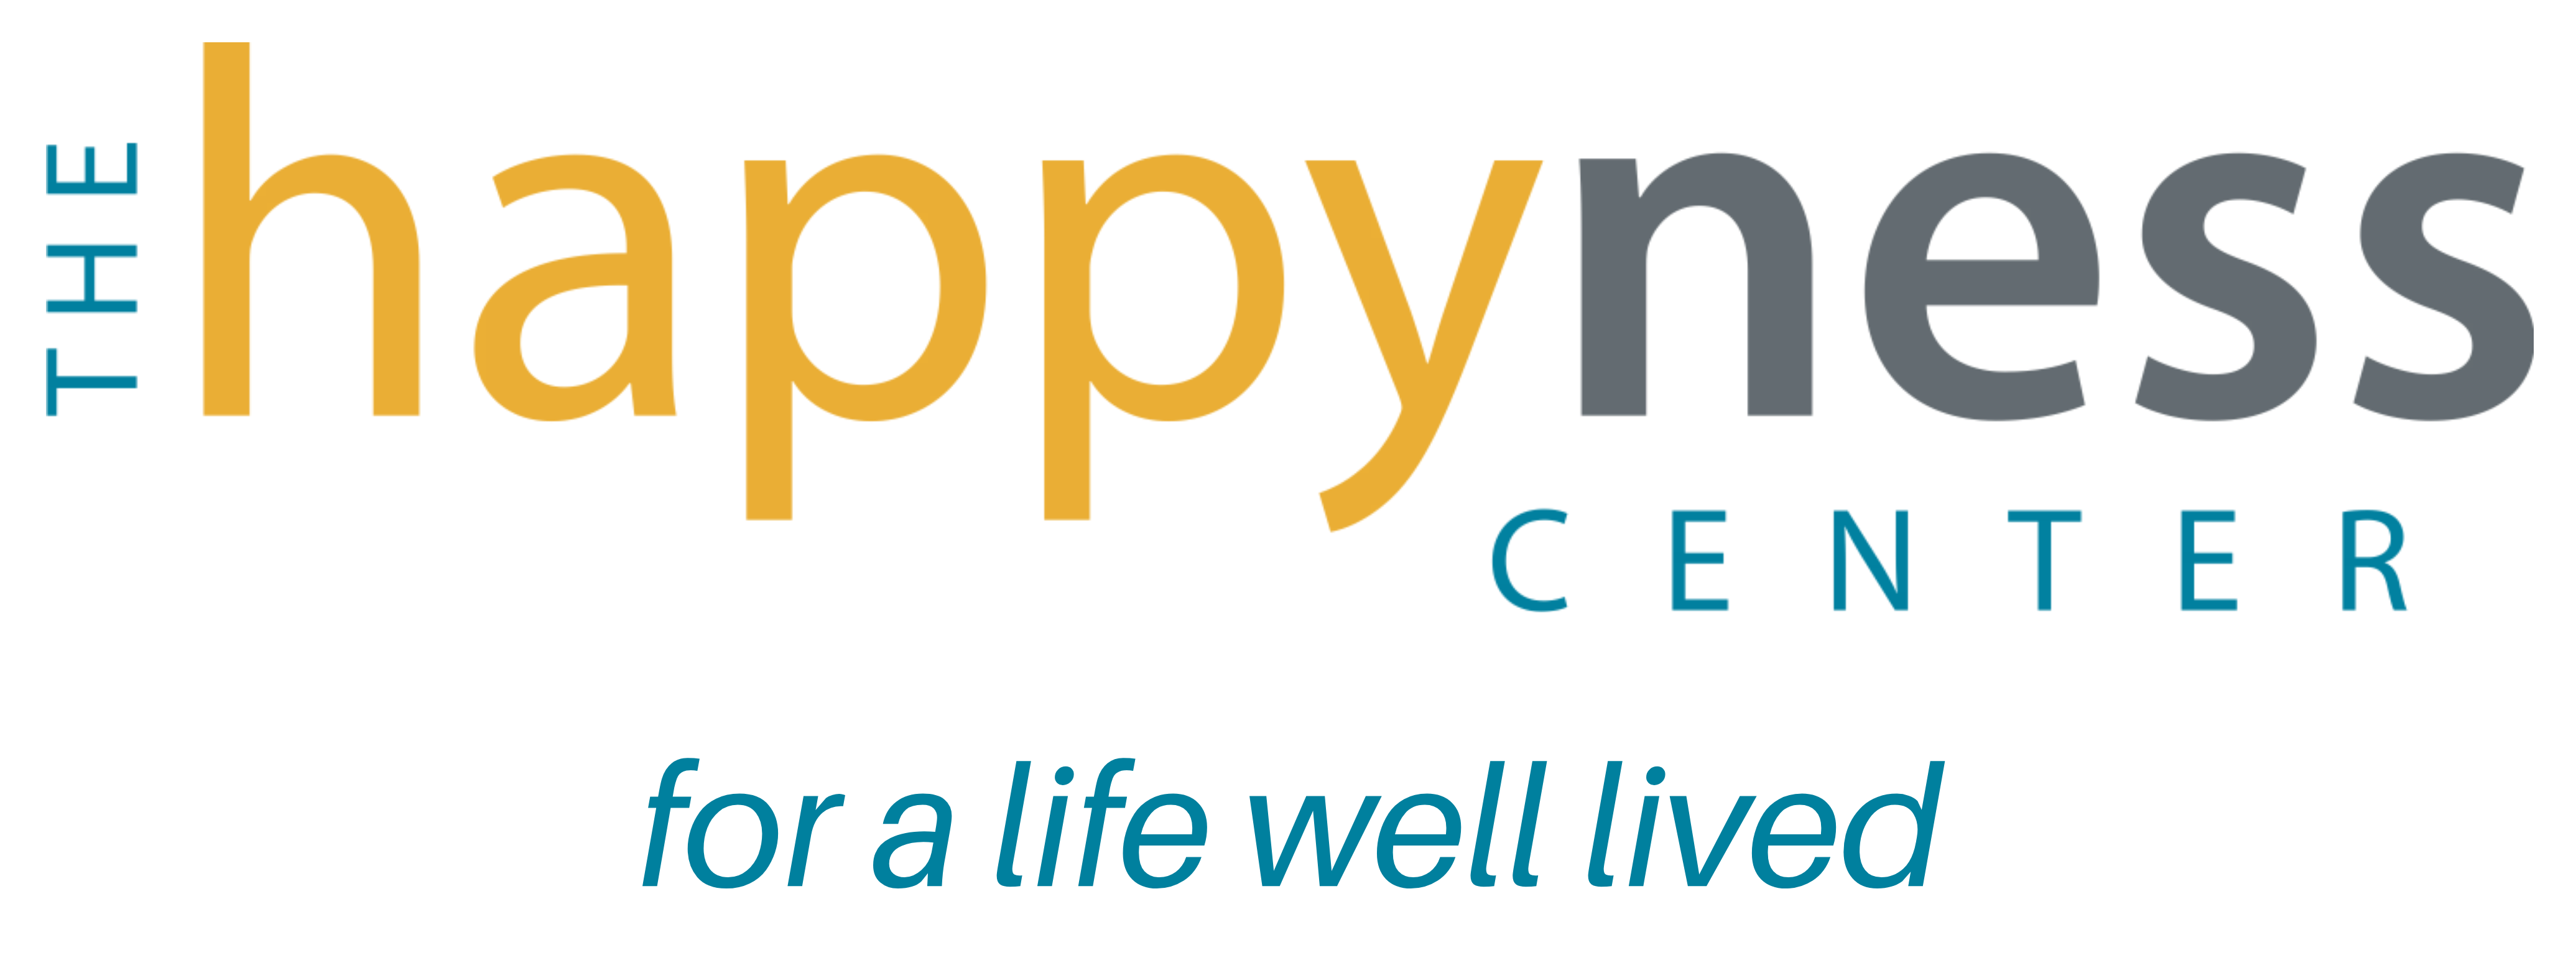 The Happyness Center Foundation logo